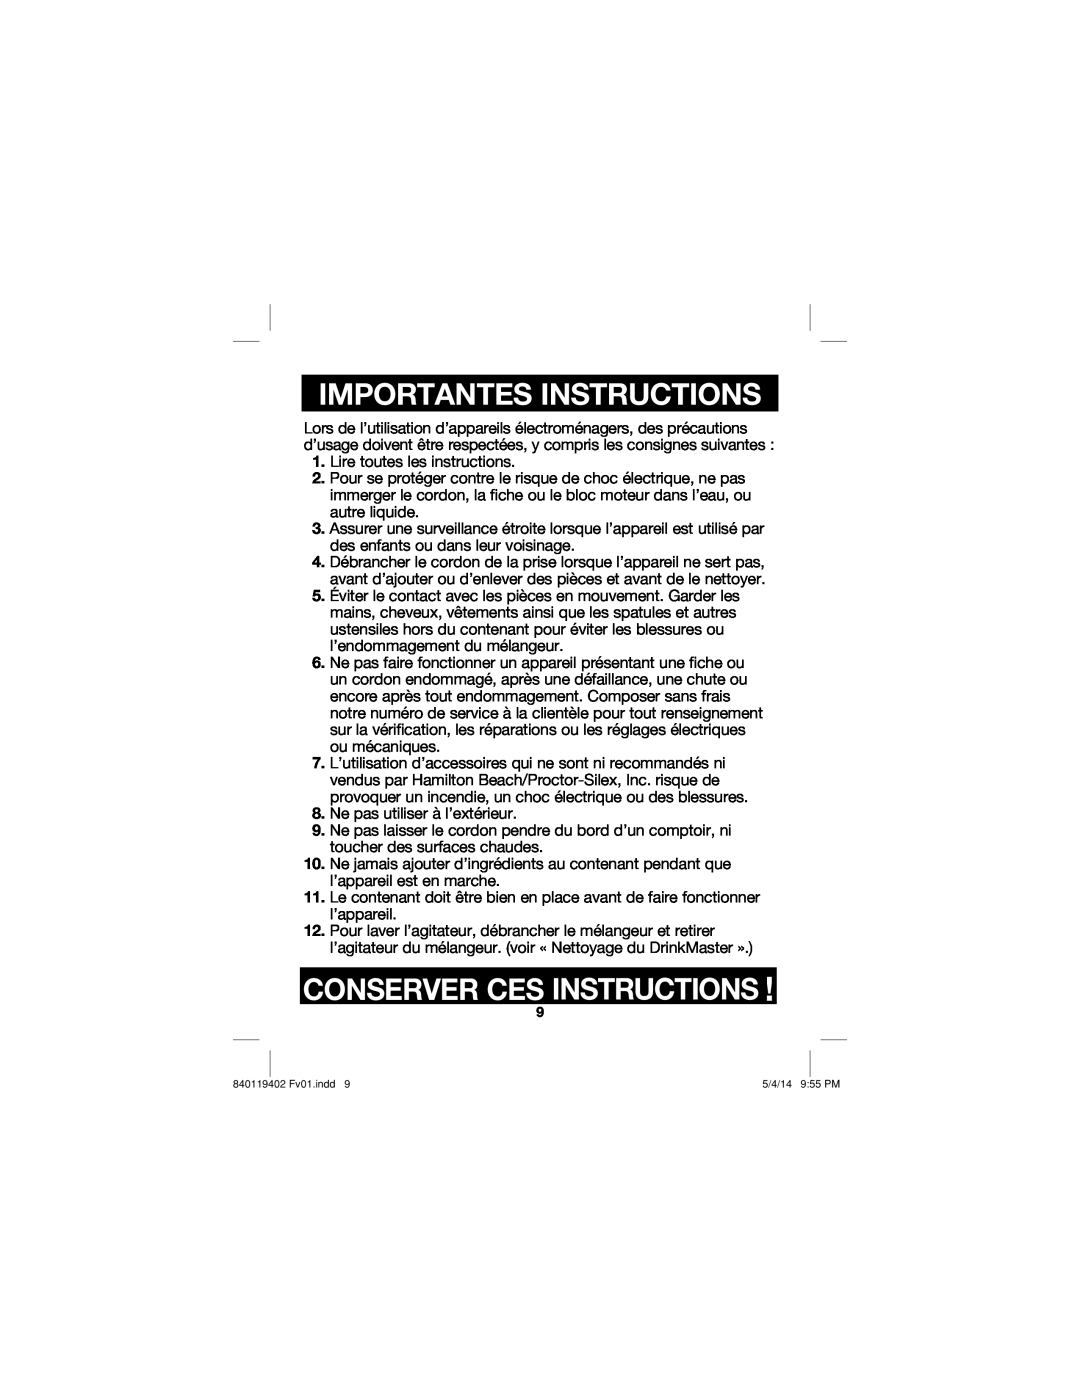 Hamilton Beach 840119402 manual Importantes Instructions, Conserver Ces Instructions 